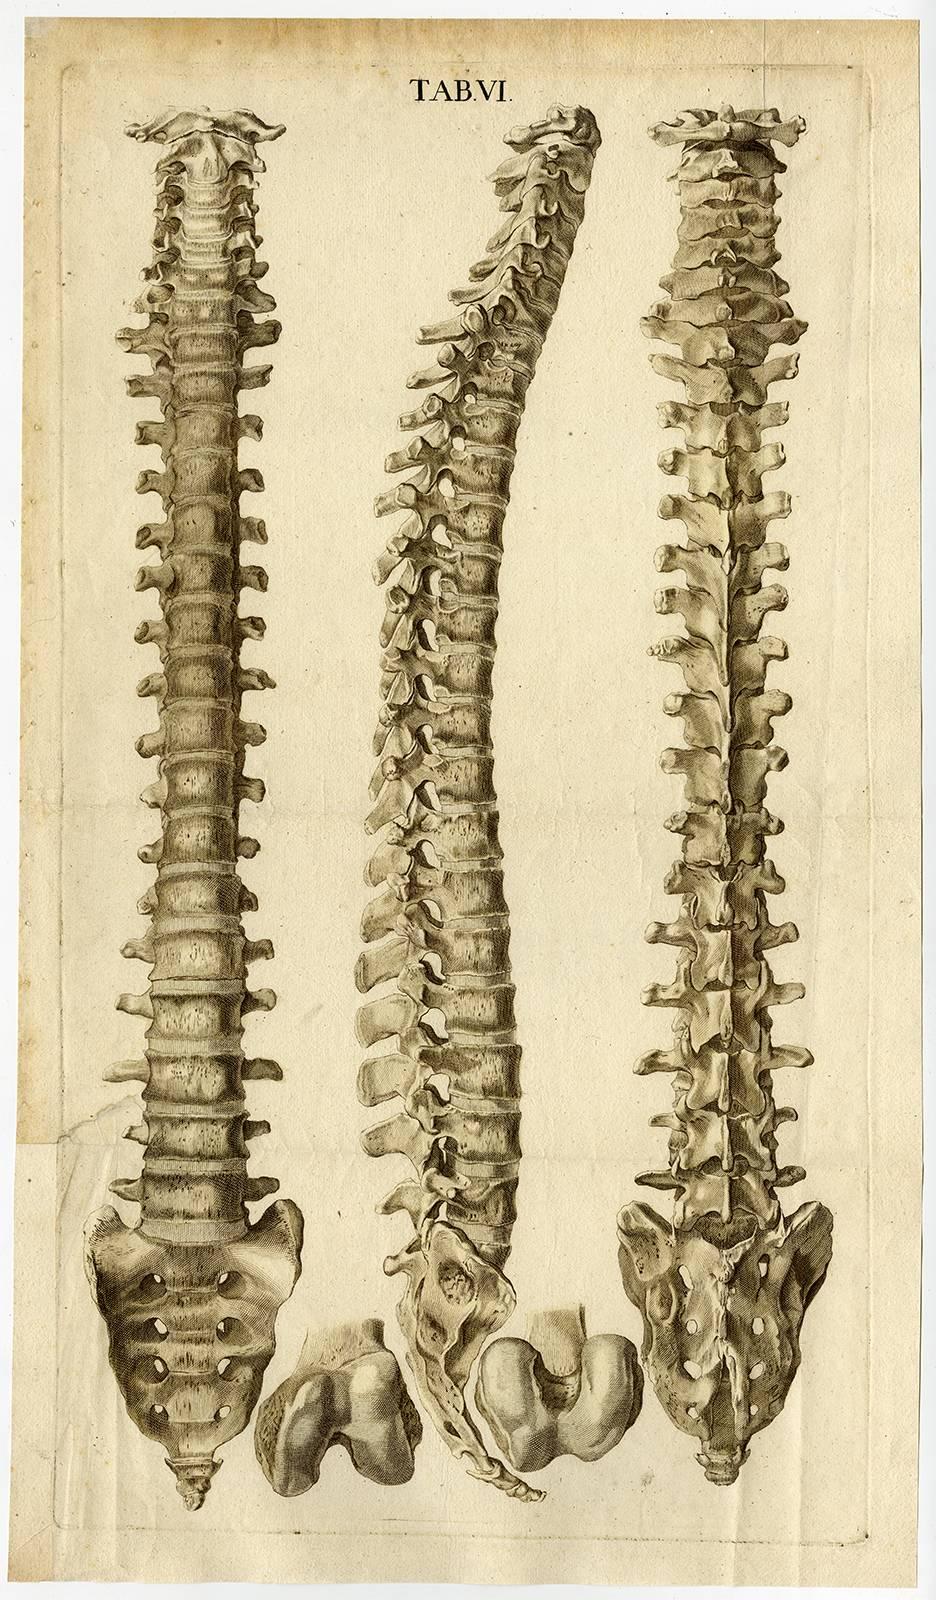 Christoph Jacob Trew Print - Tab VI.'' - The human spine or vertebrae, nearly life-sized depiction, [...].